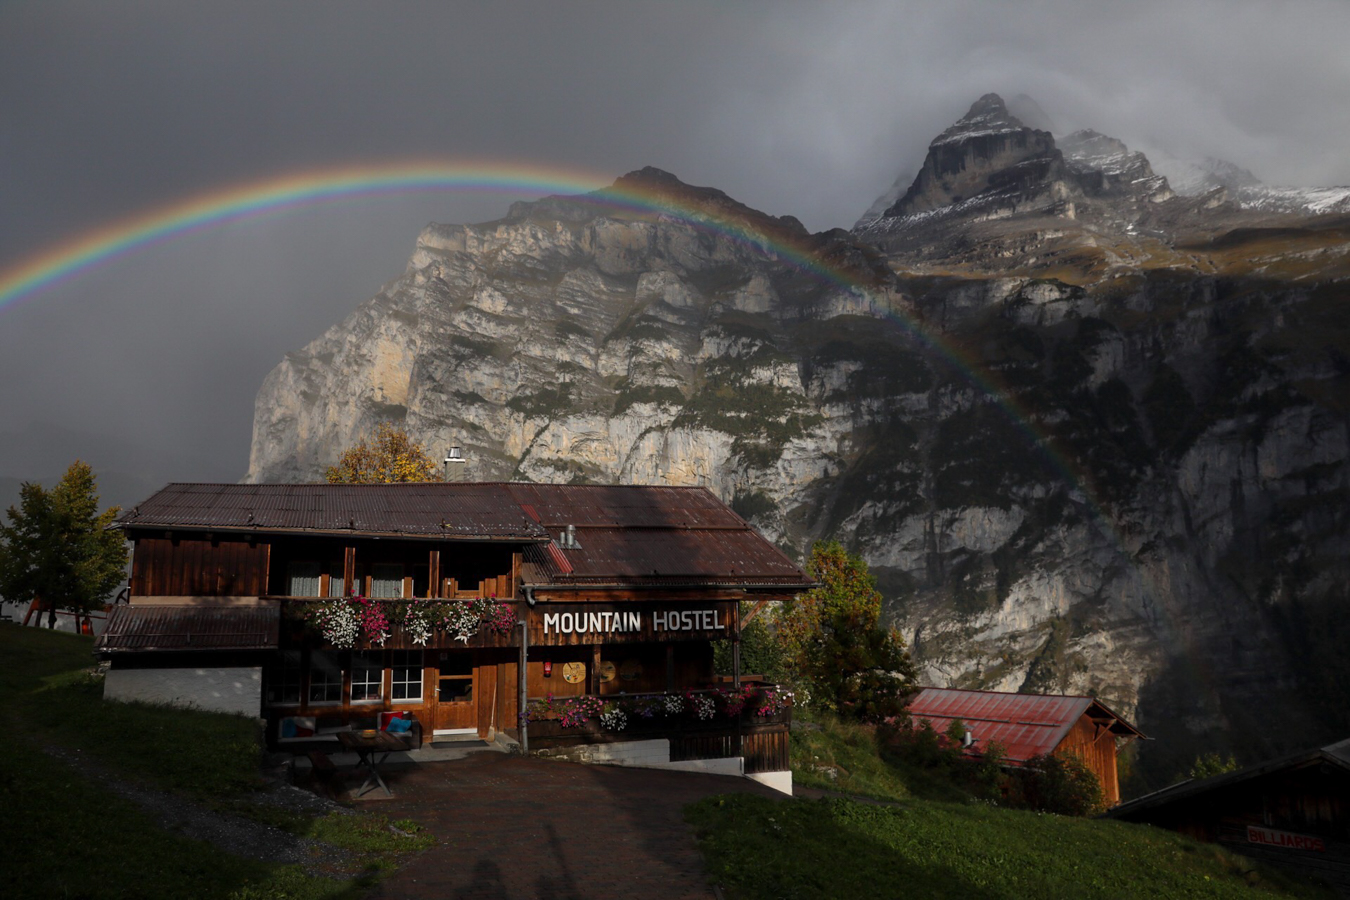 Mountain Hostel, Gimmelwald, Switzerland